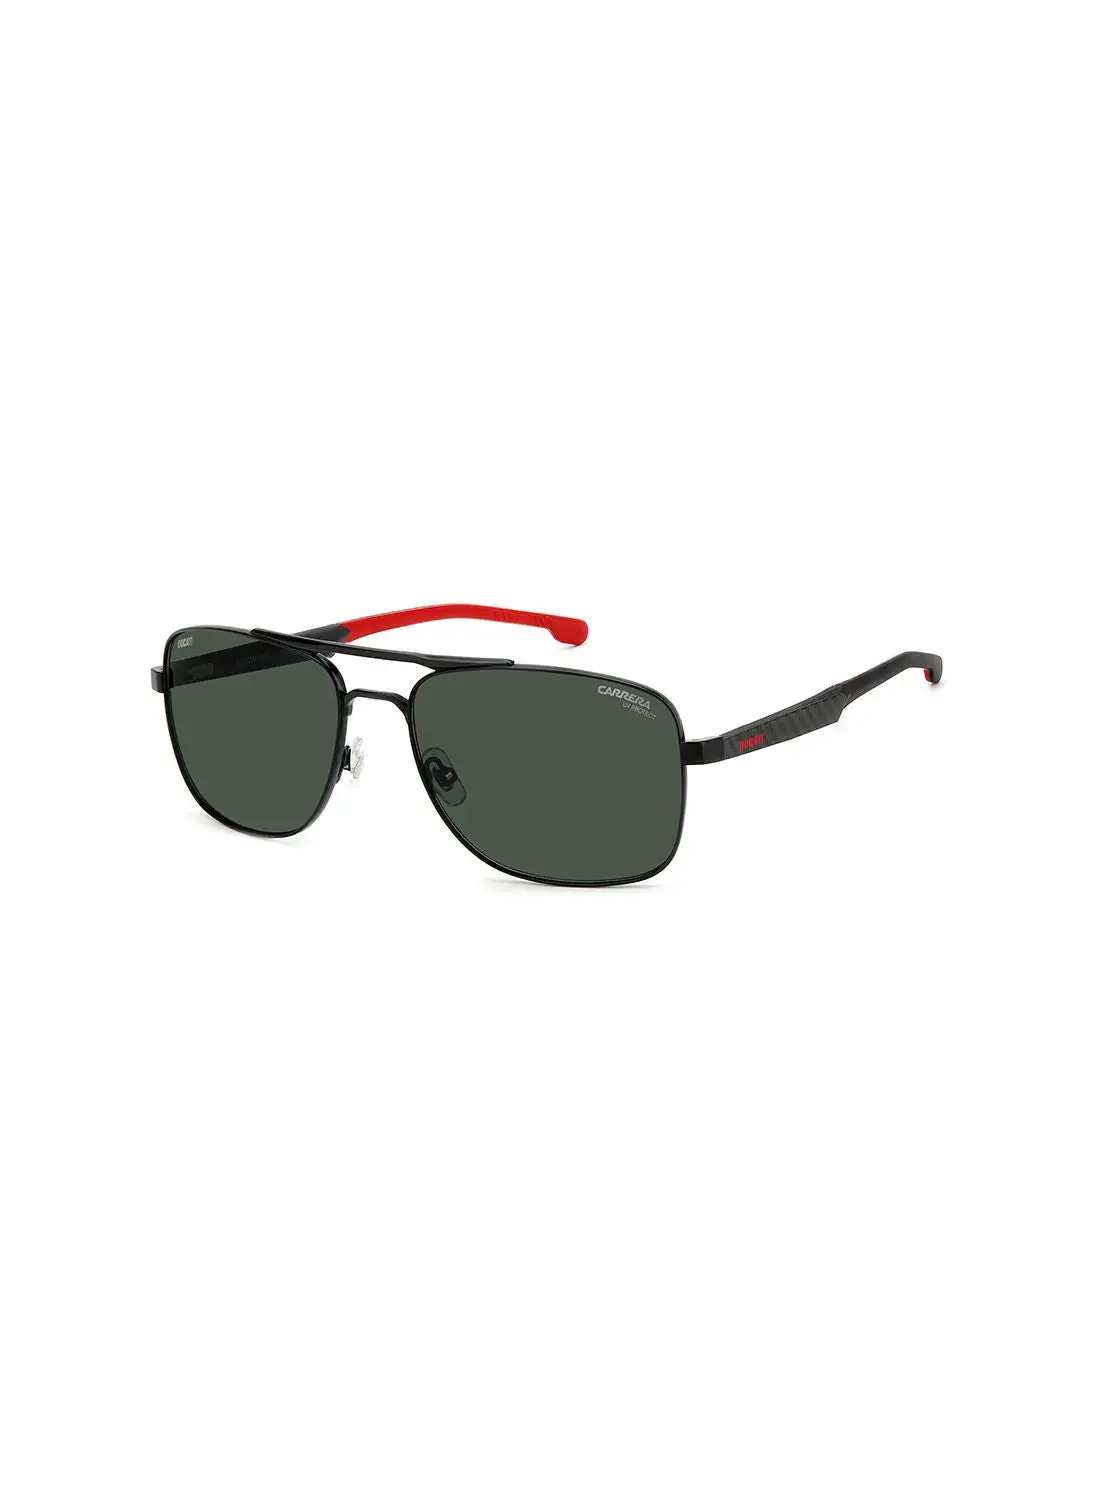 Carrera Men's UV Protection Sunglasses - Carduc 022/S Black Red 60 - Lens Size: 60 Mm